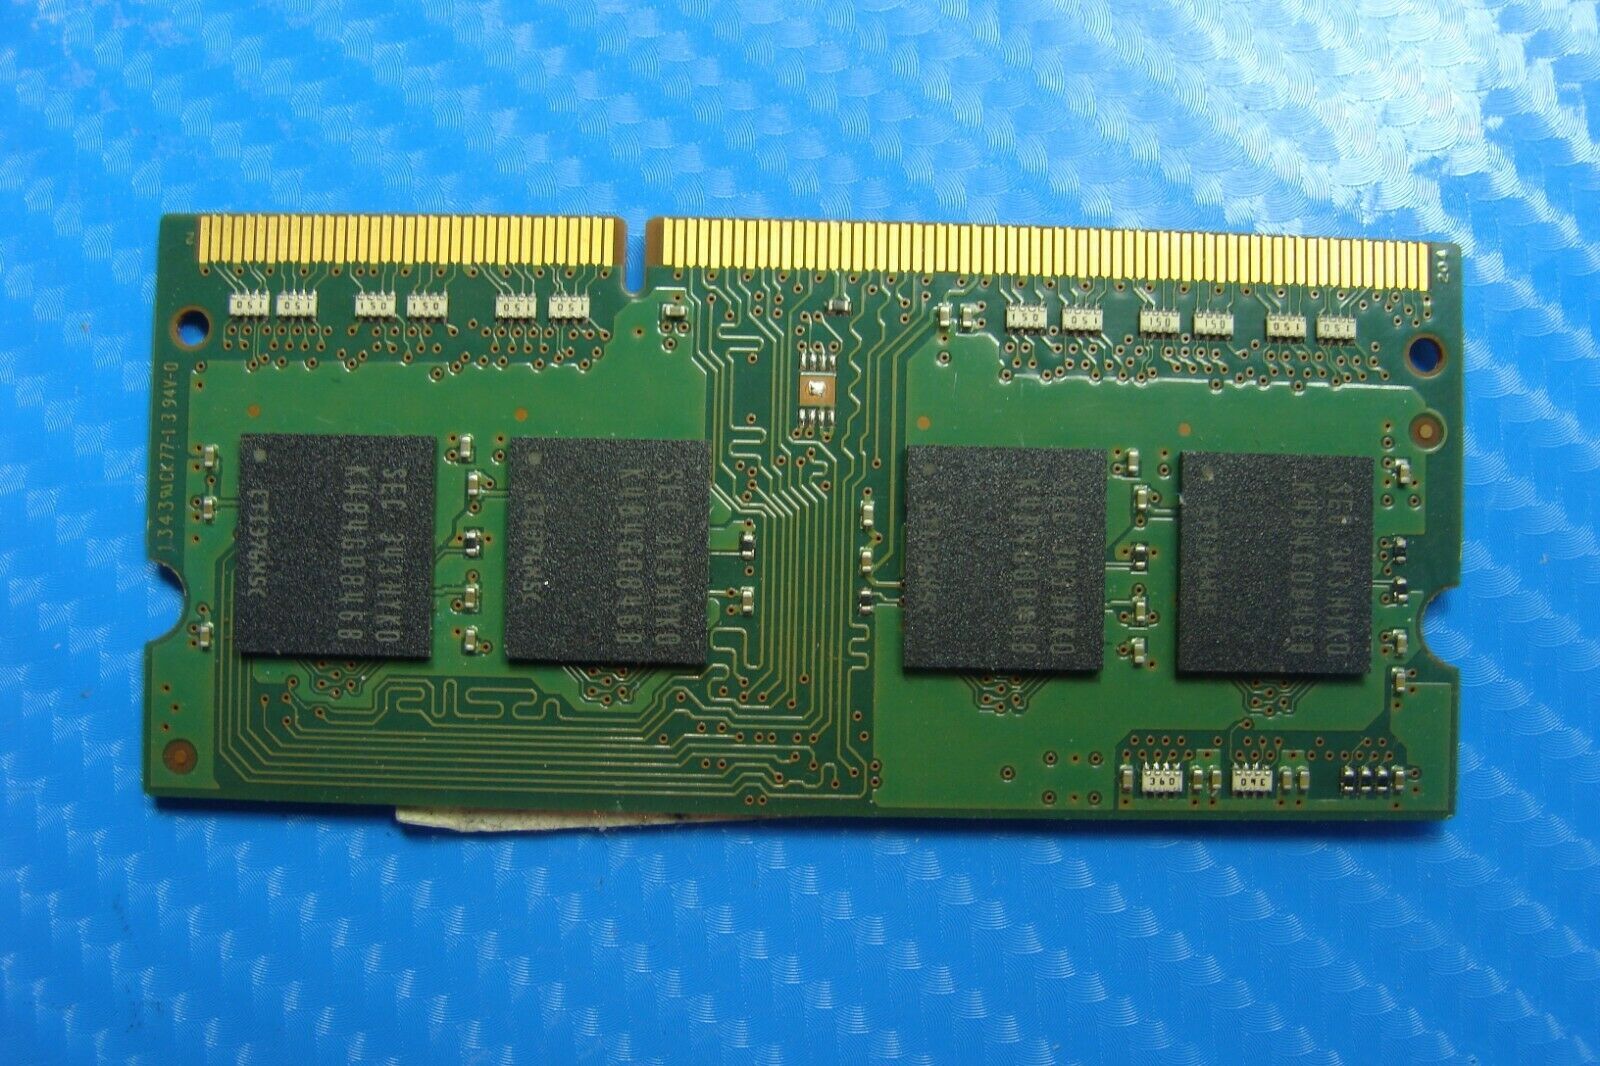 Lenovo Z710 Samsung 4Gb 1Rx8 Memory Ram So-Dimm pc3l-12800s m471b5173bh0-yk0 